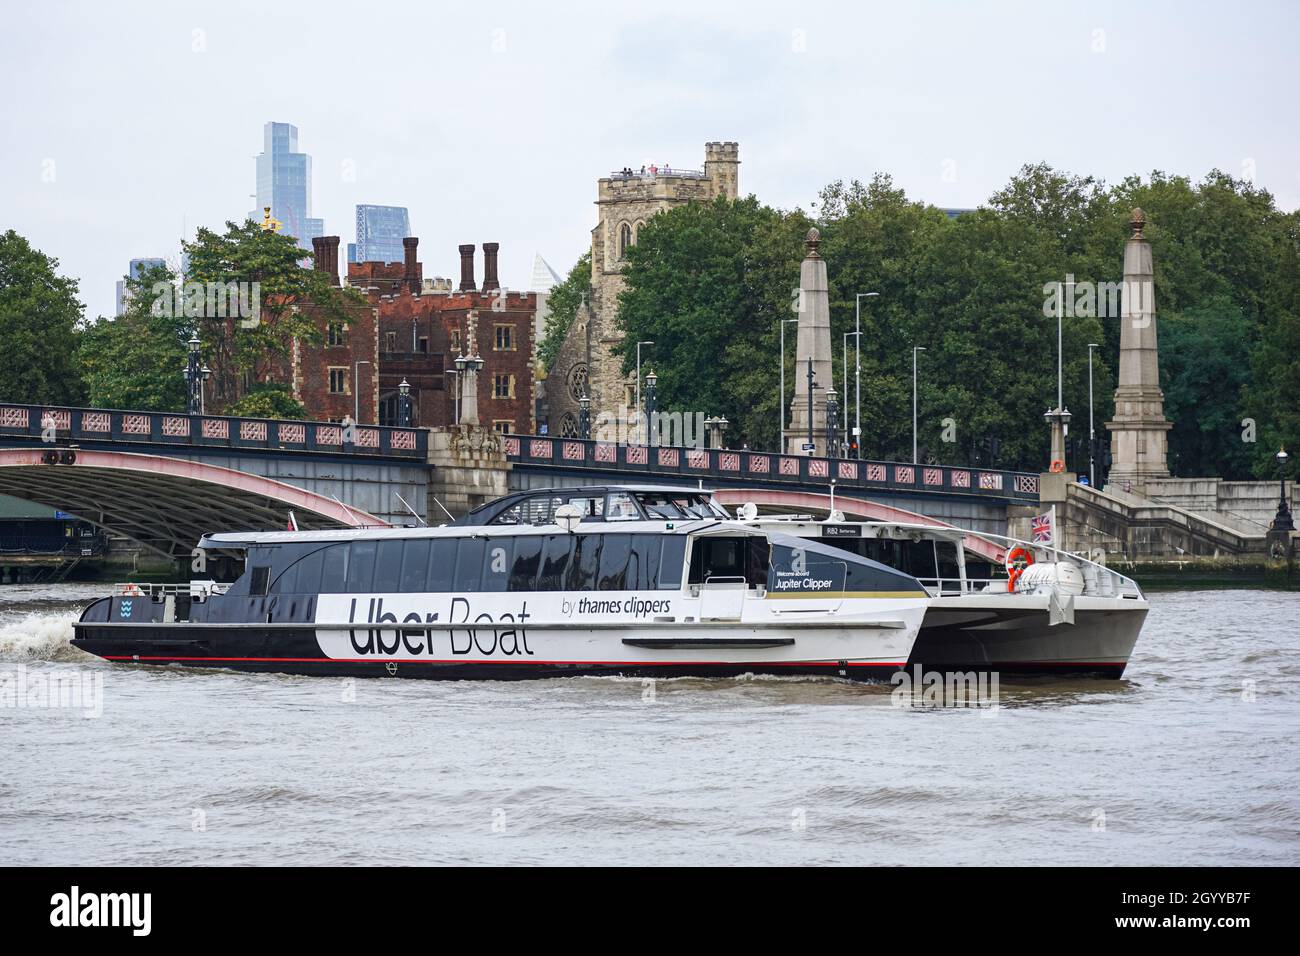 Thames Clipper, Uber Boat on the River Thames, London England Vereinigtes Königreich Großbritannien Stockfoto